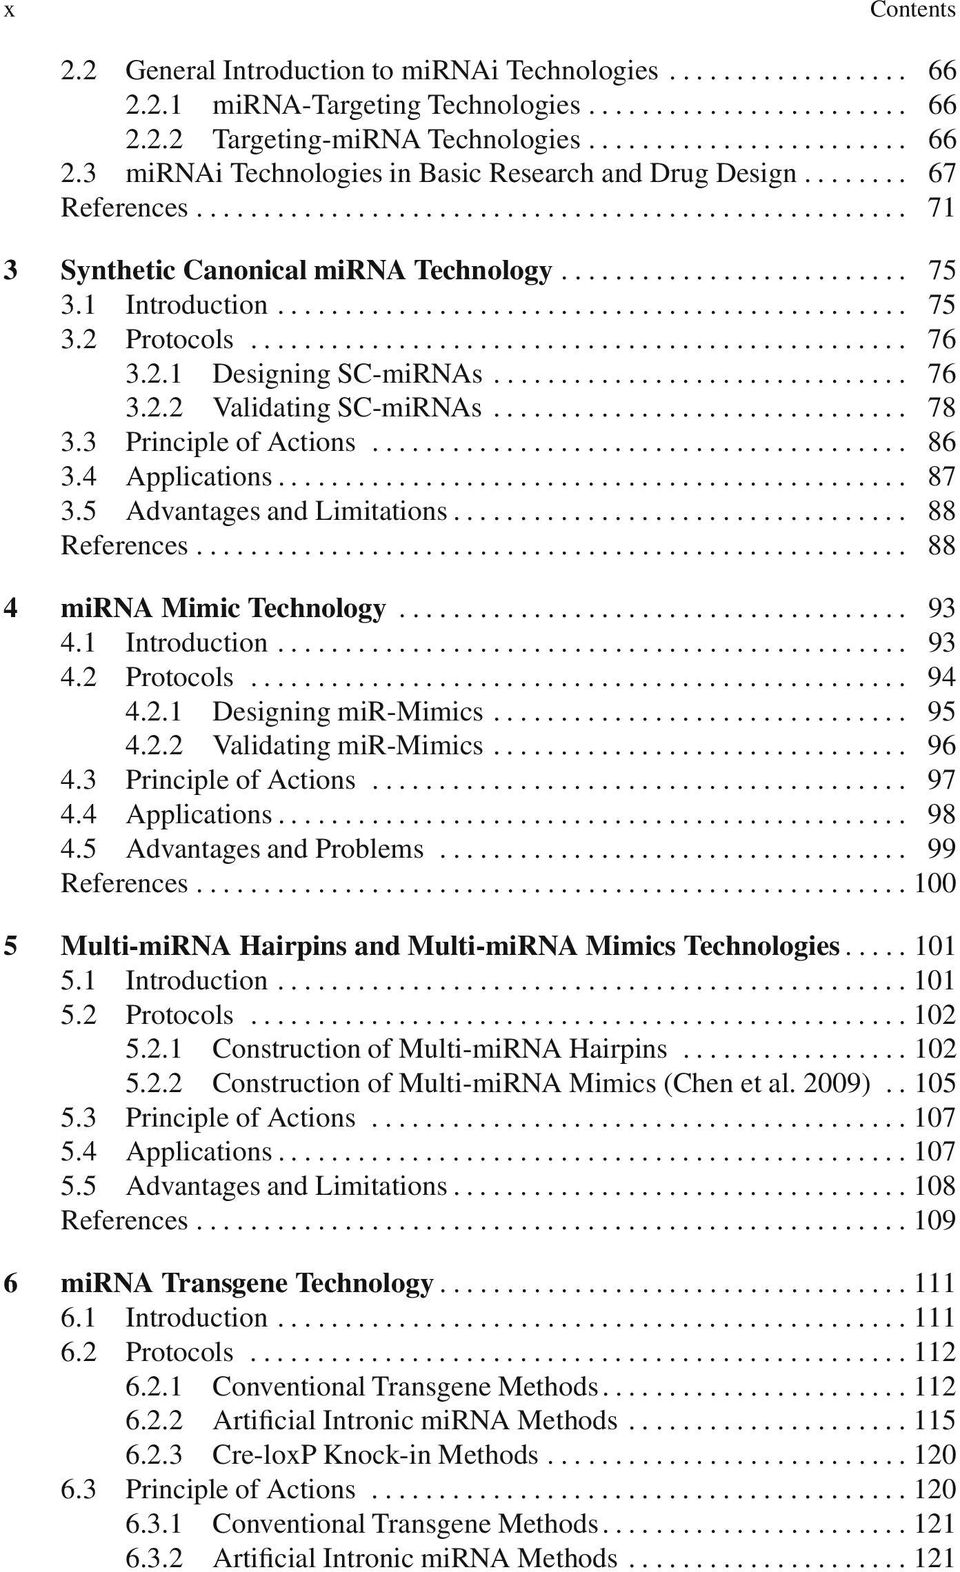 3 PrincipleofActions... 86 3.4 Applications... 87 3.5 AdvantagesandLimitations... 88 References... 88 4 mirna Mimic Technology... 93 4.1 Introduction...... 93 4.2 Protocols... 94 4.2.1 DesigningmiR-Mimics.